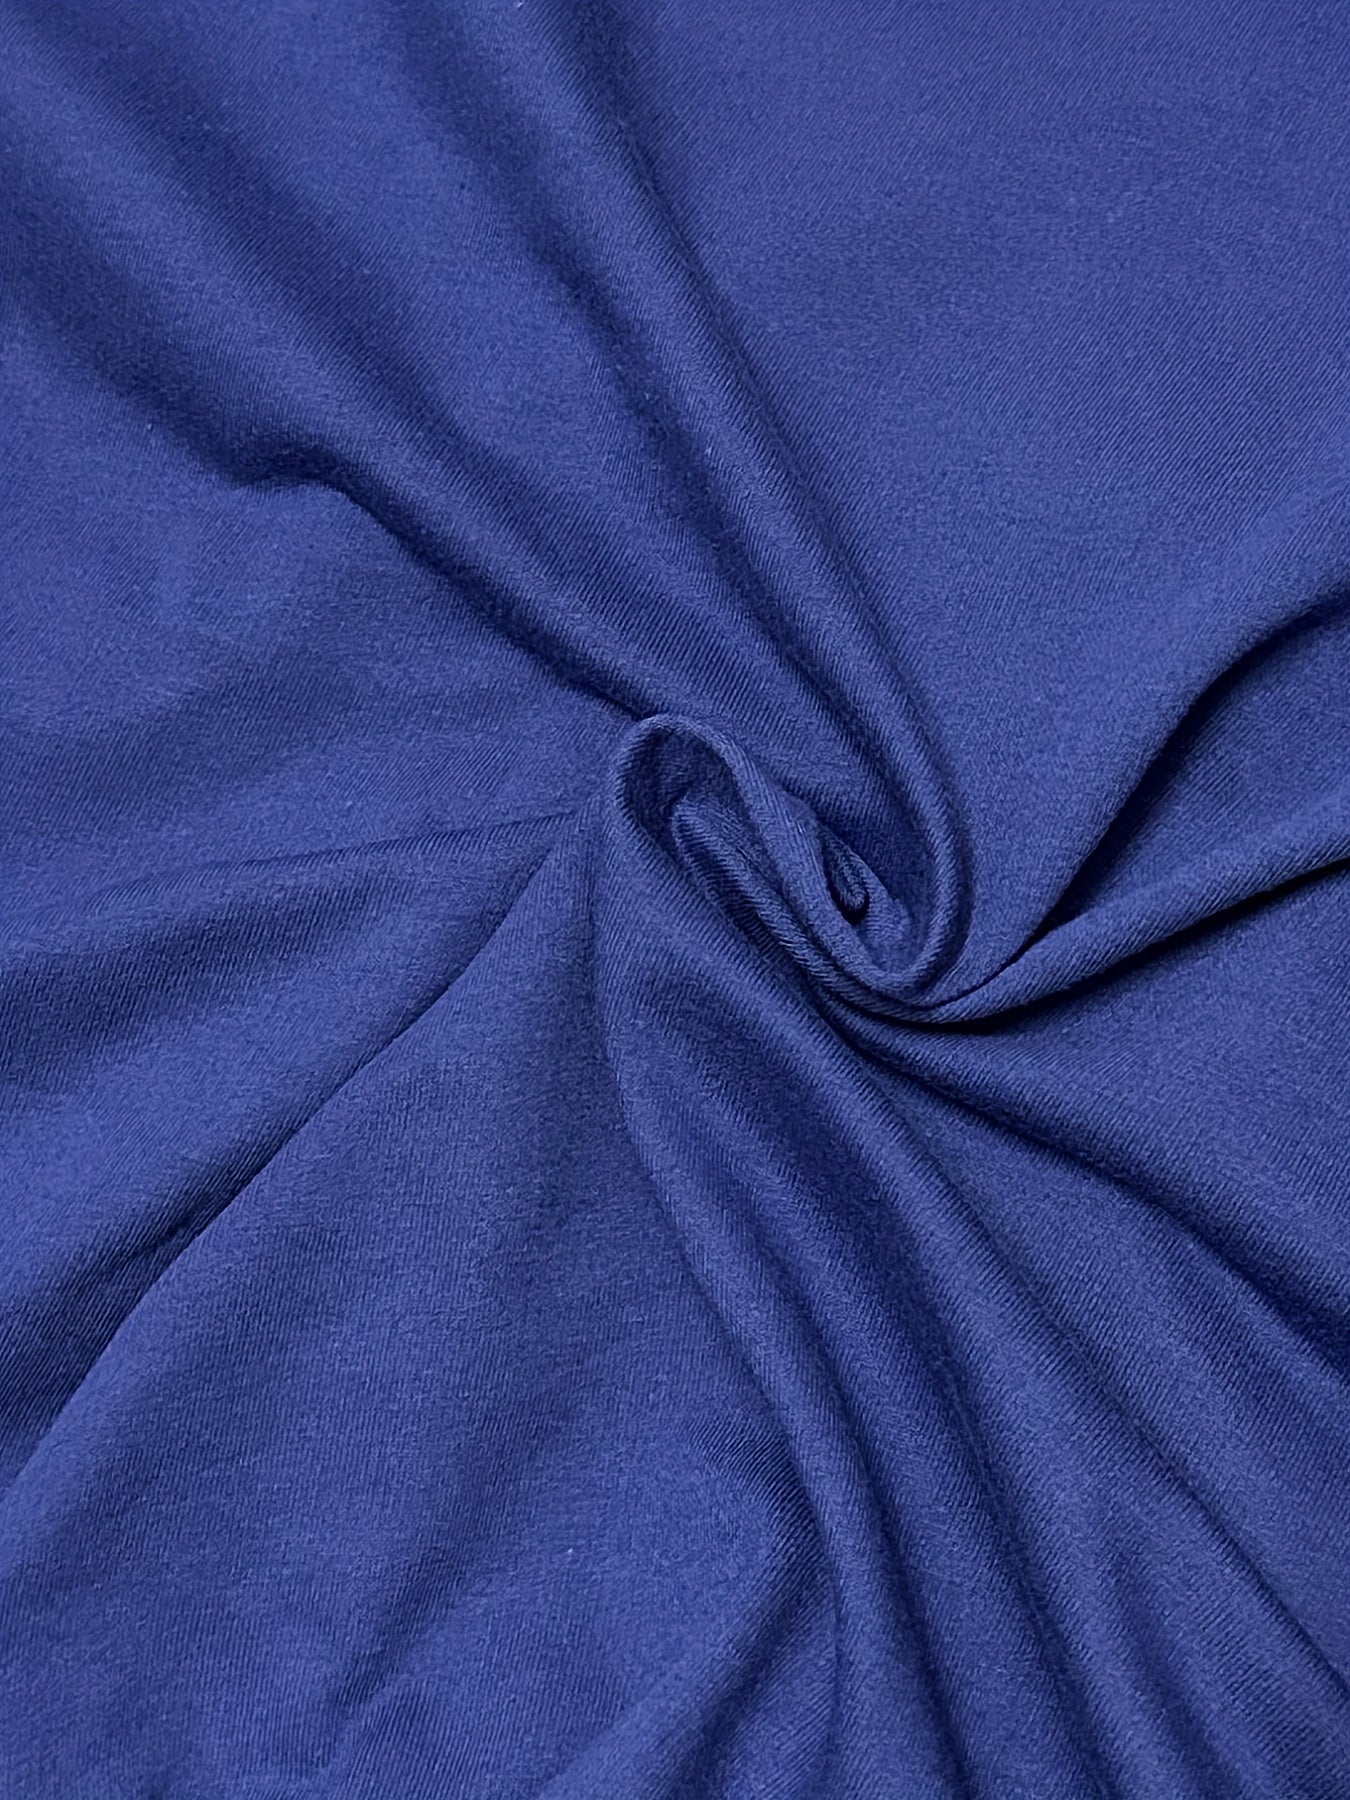 gbolsos  Patched Letter Drawstring Zipper Sweatshirt, Casual Long Sleeve Crop Sweatshirt, Women's Clothing